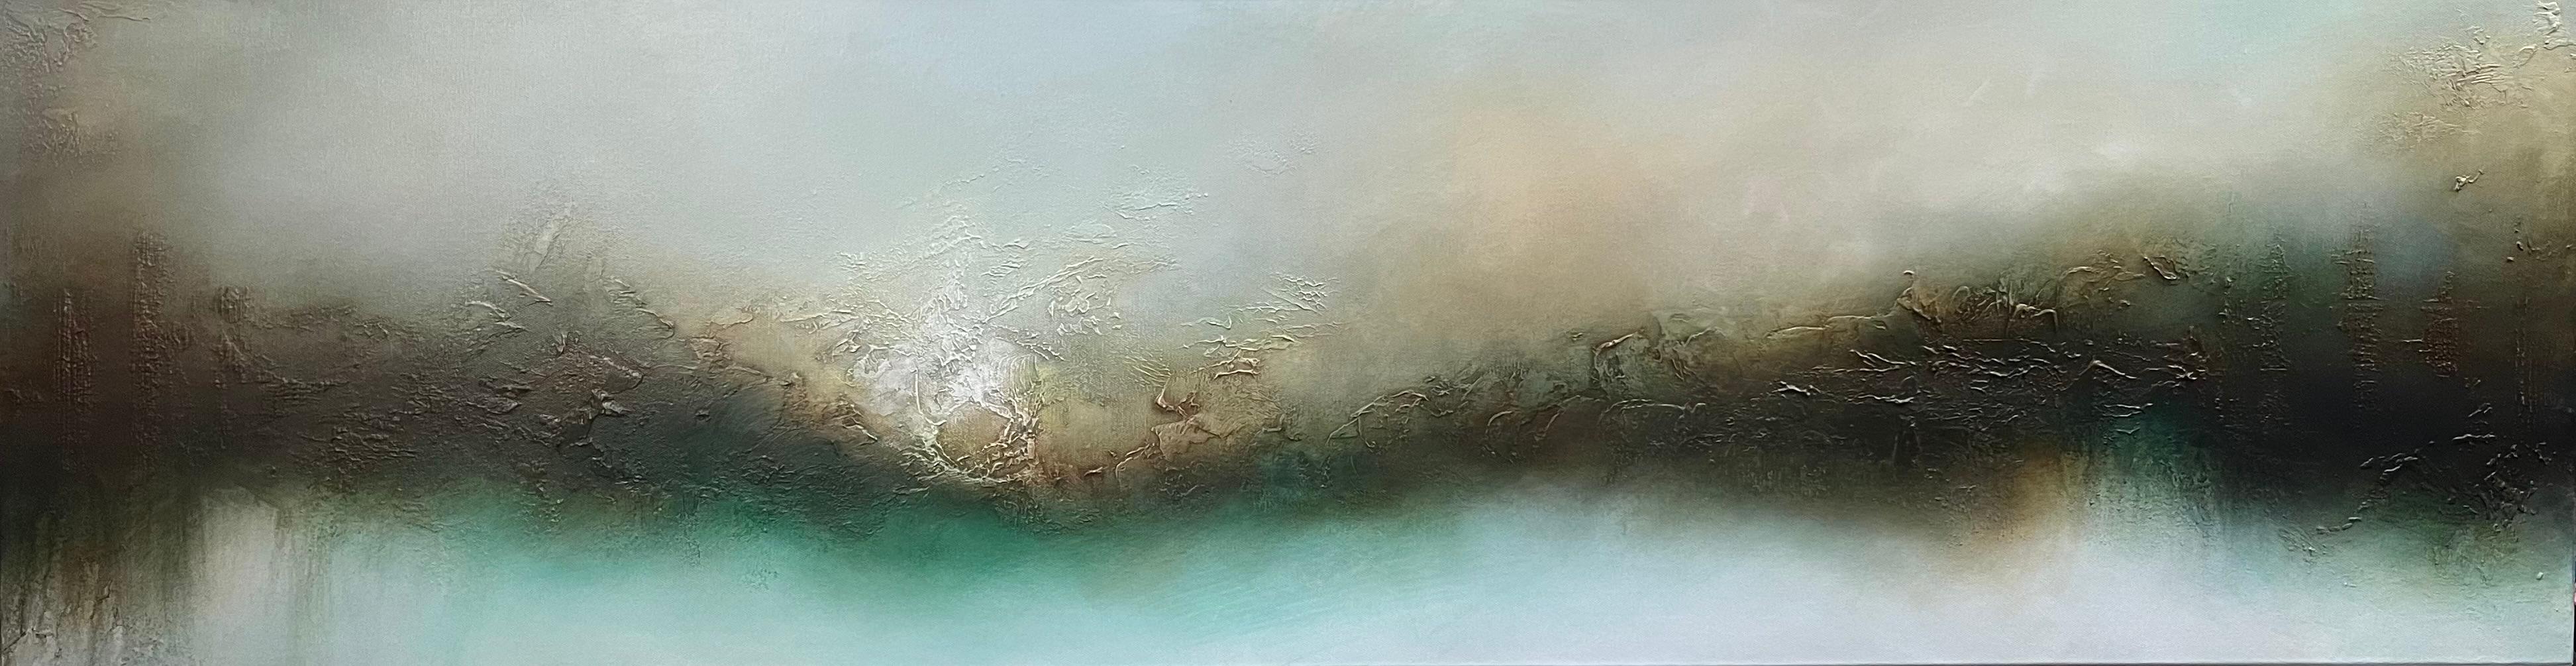 Encompassing-abstract landscape painting- original mixed media seascape artwork